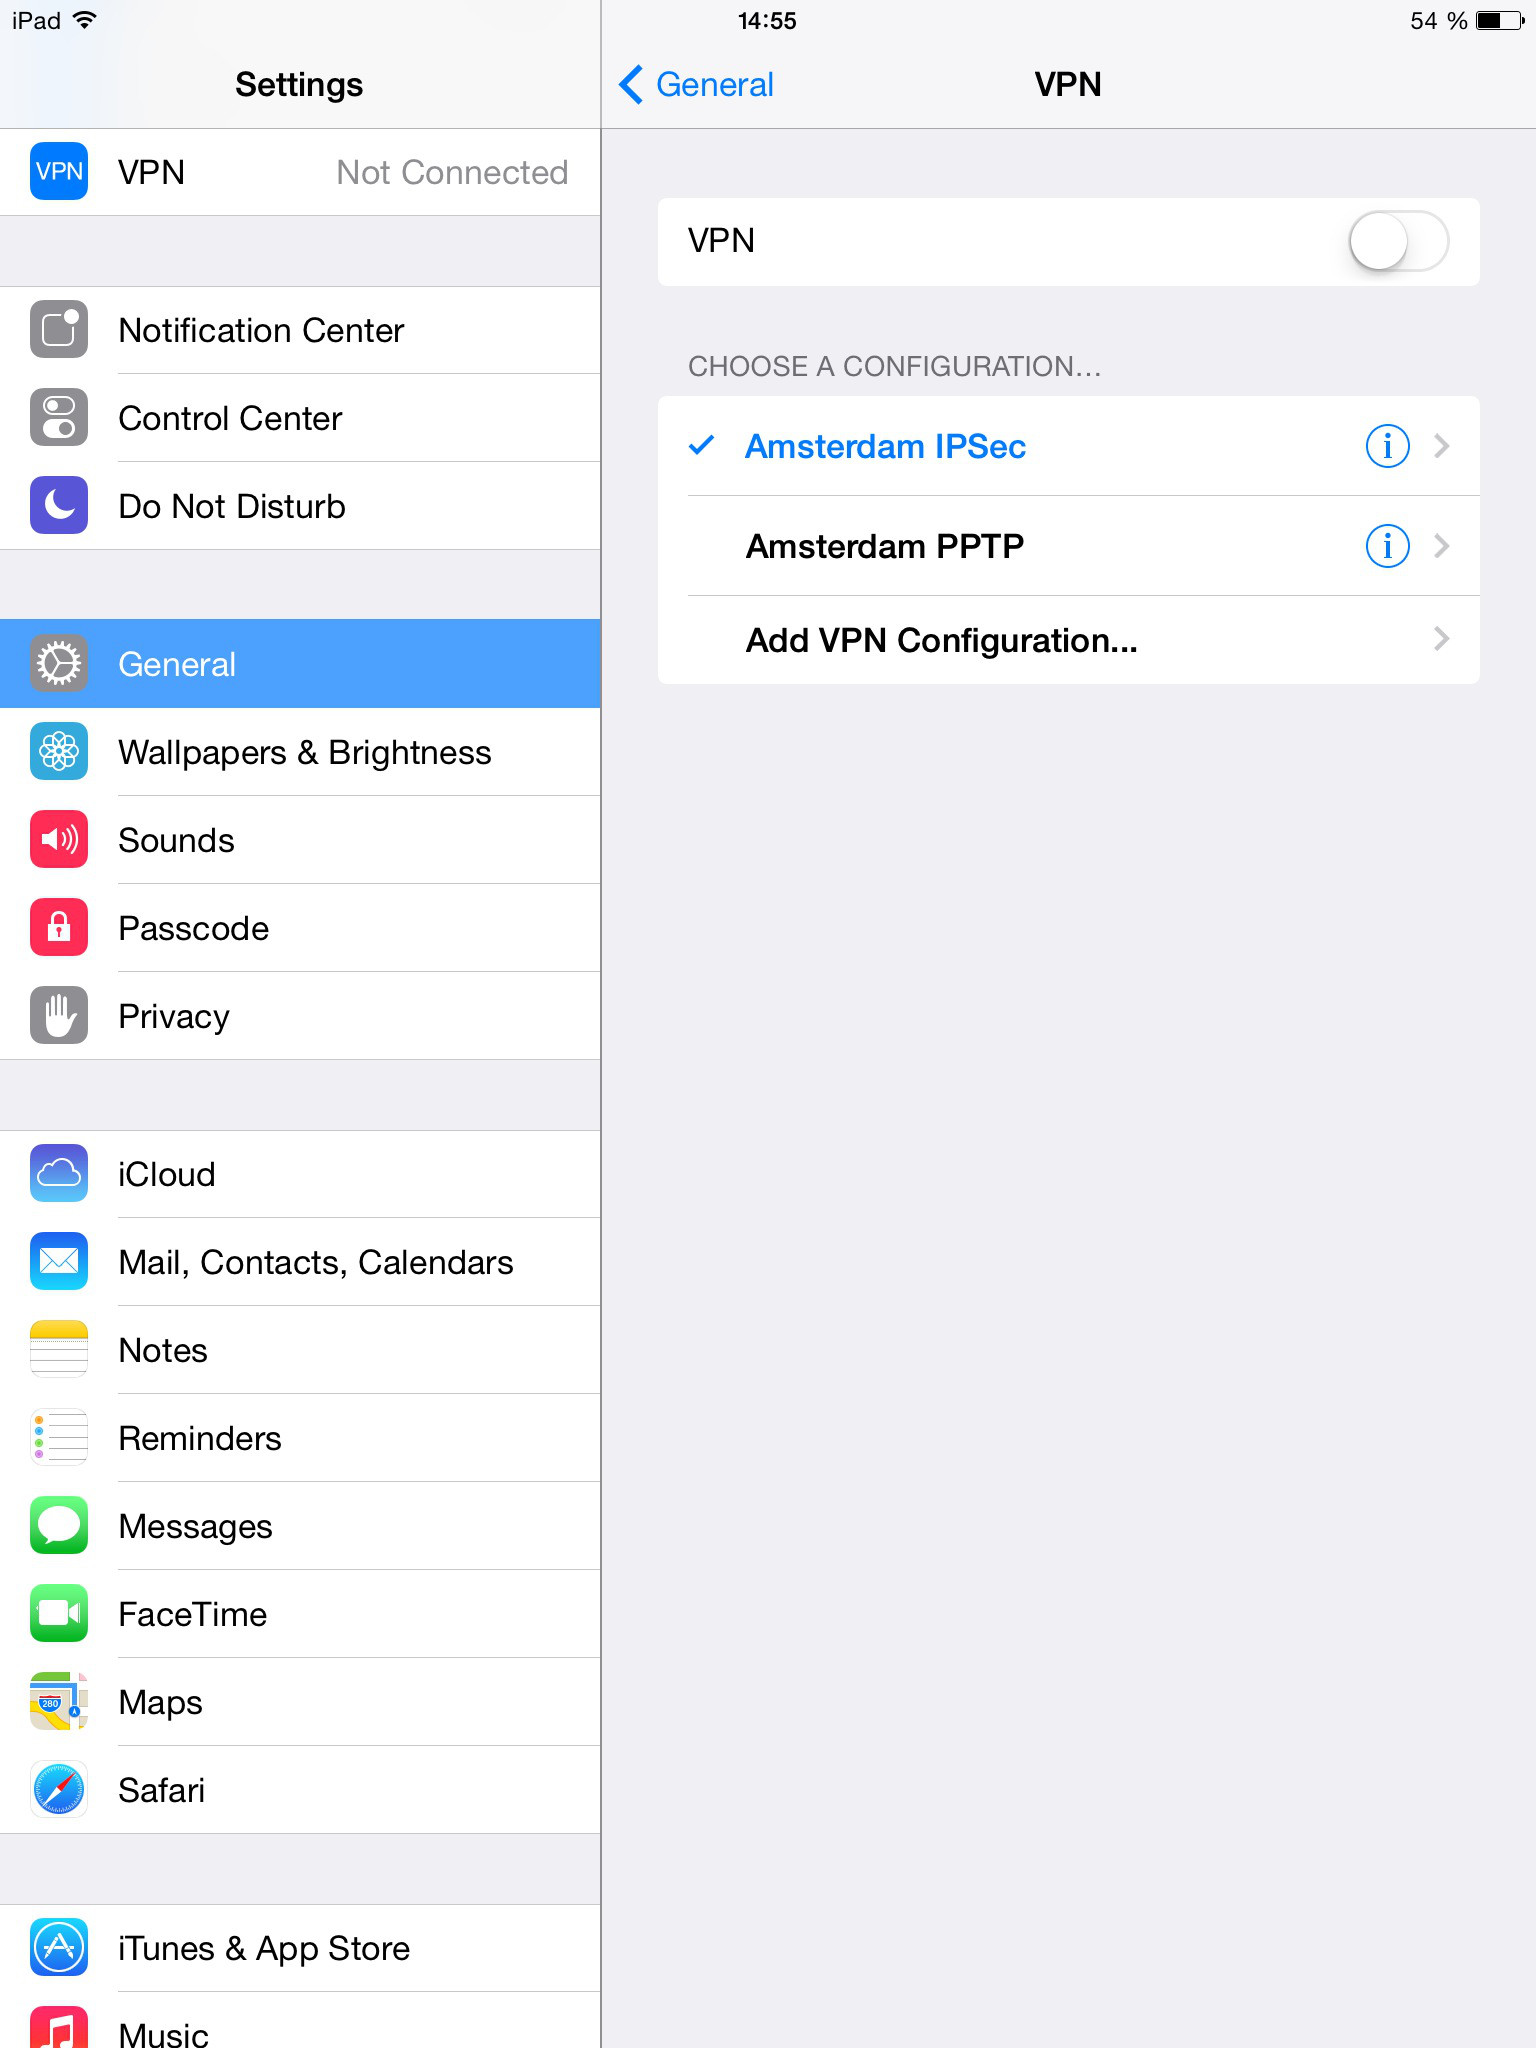 iPad (iOS), Settings > General > VPN: Add VPN Configuration | IPsec with iOS